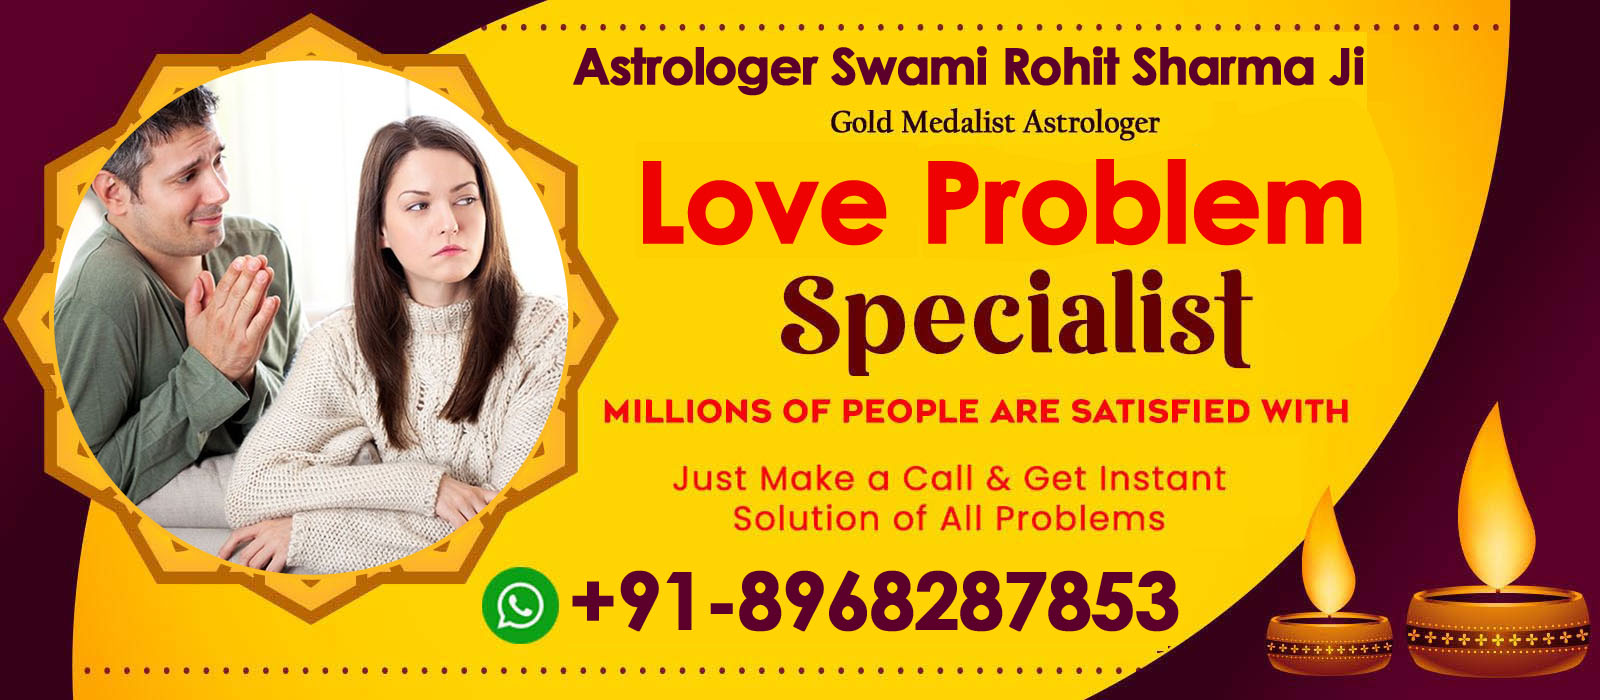 Astrologer Swami Rohit Sharma Ji +91-8968287853 